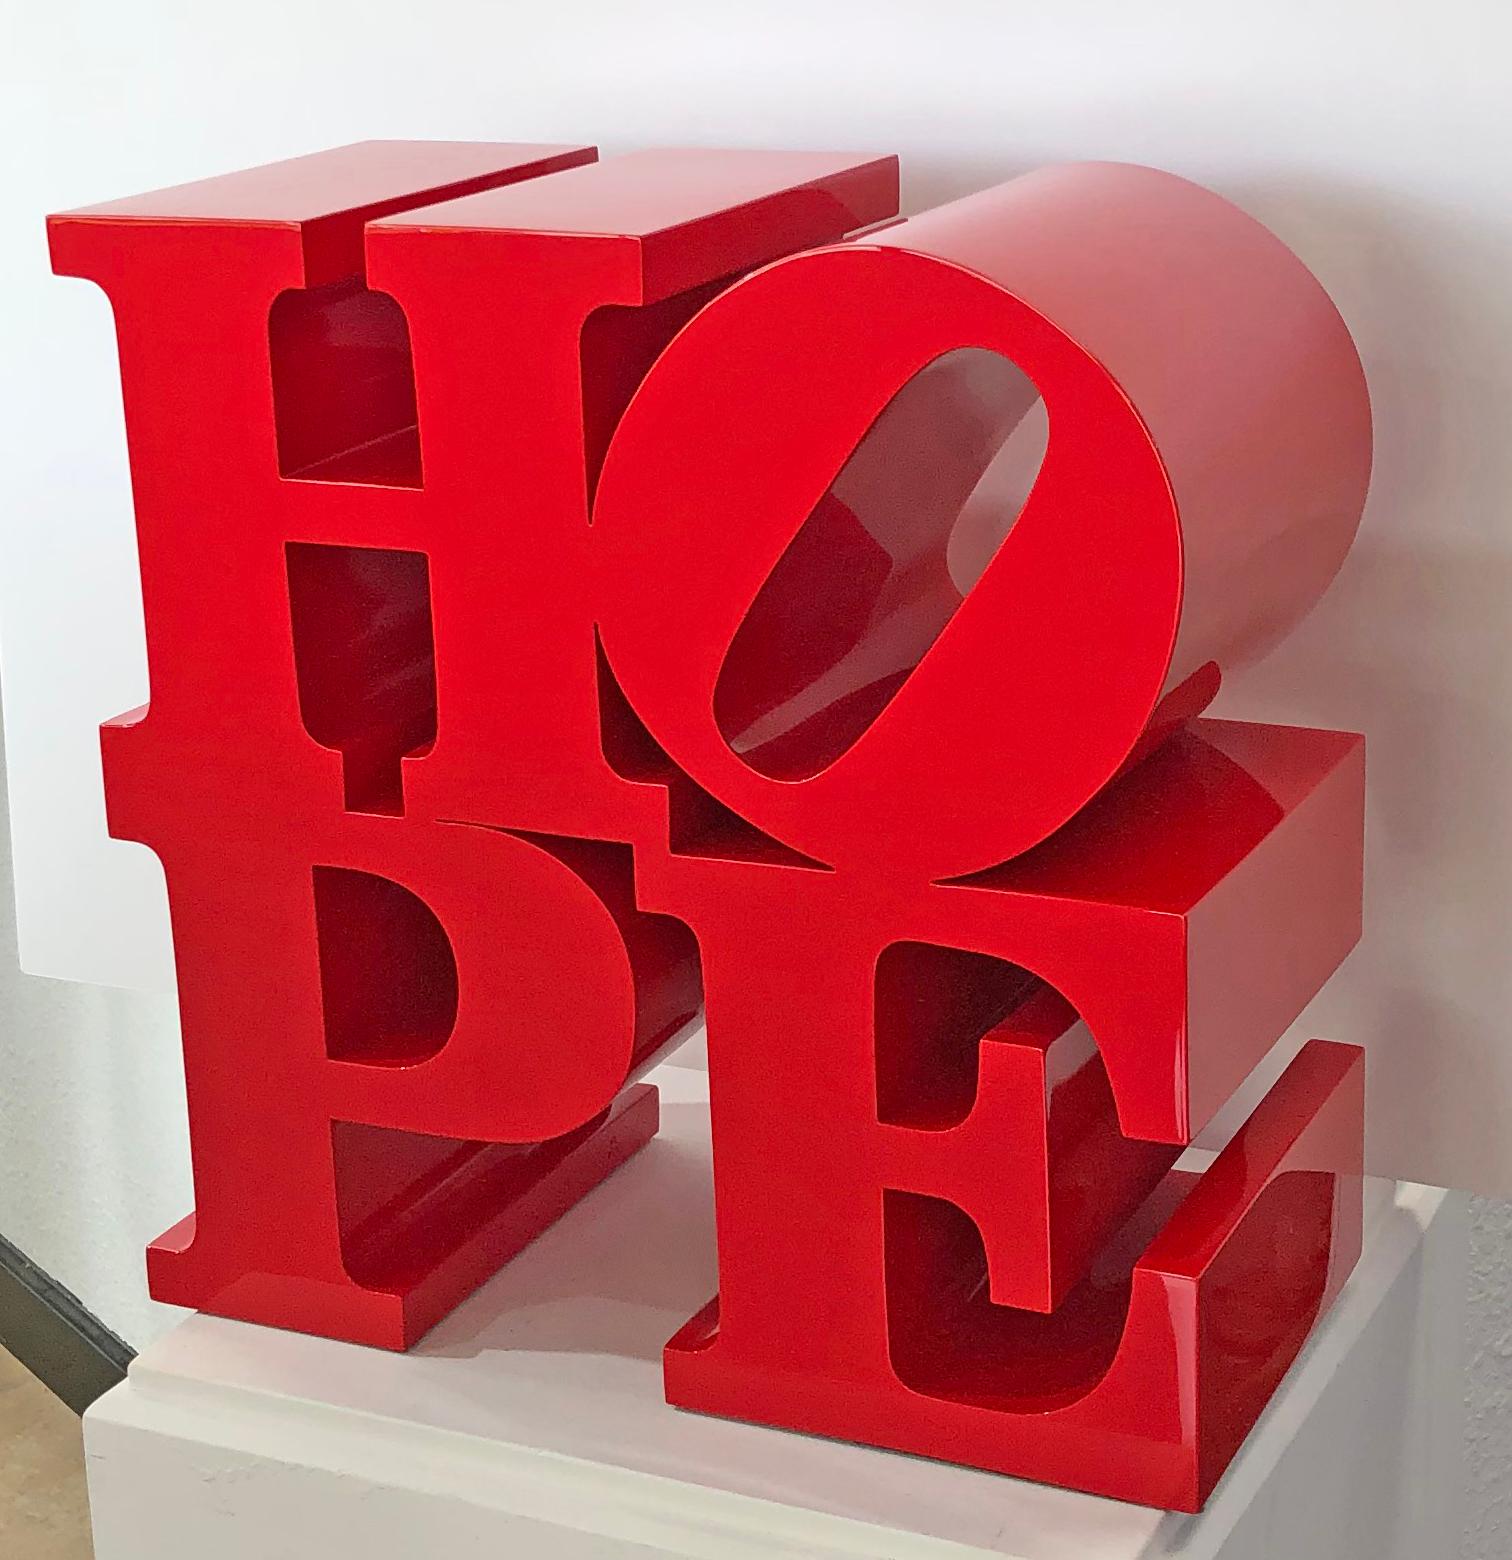 HOPE (RED) SCULPTURE - Sculpture by Robert Indiana